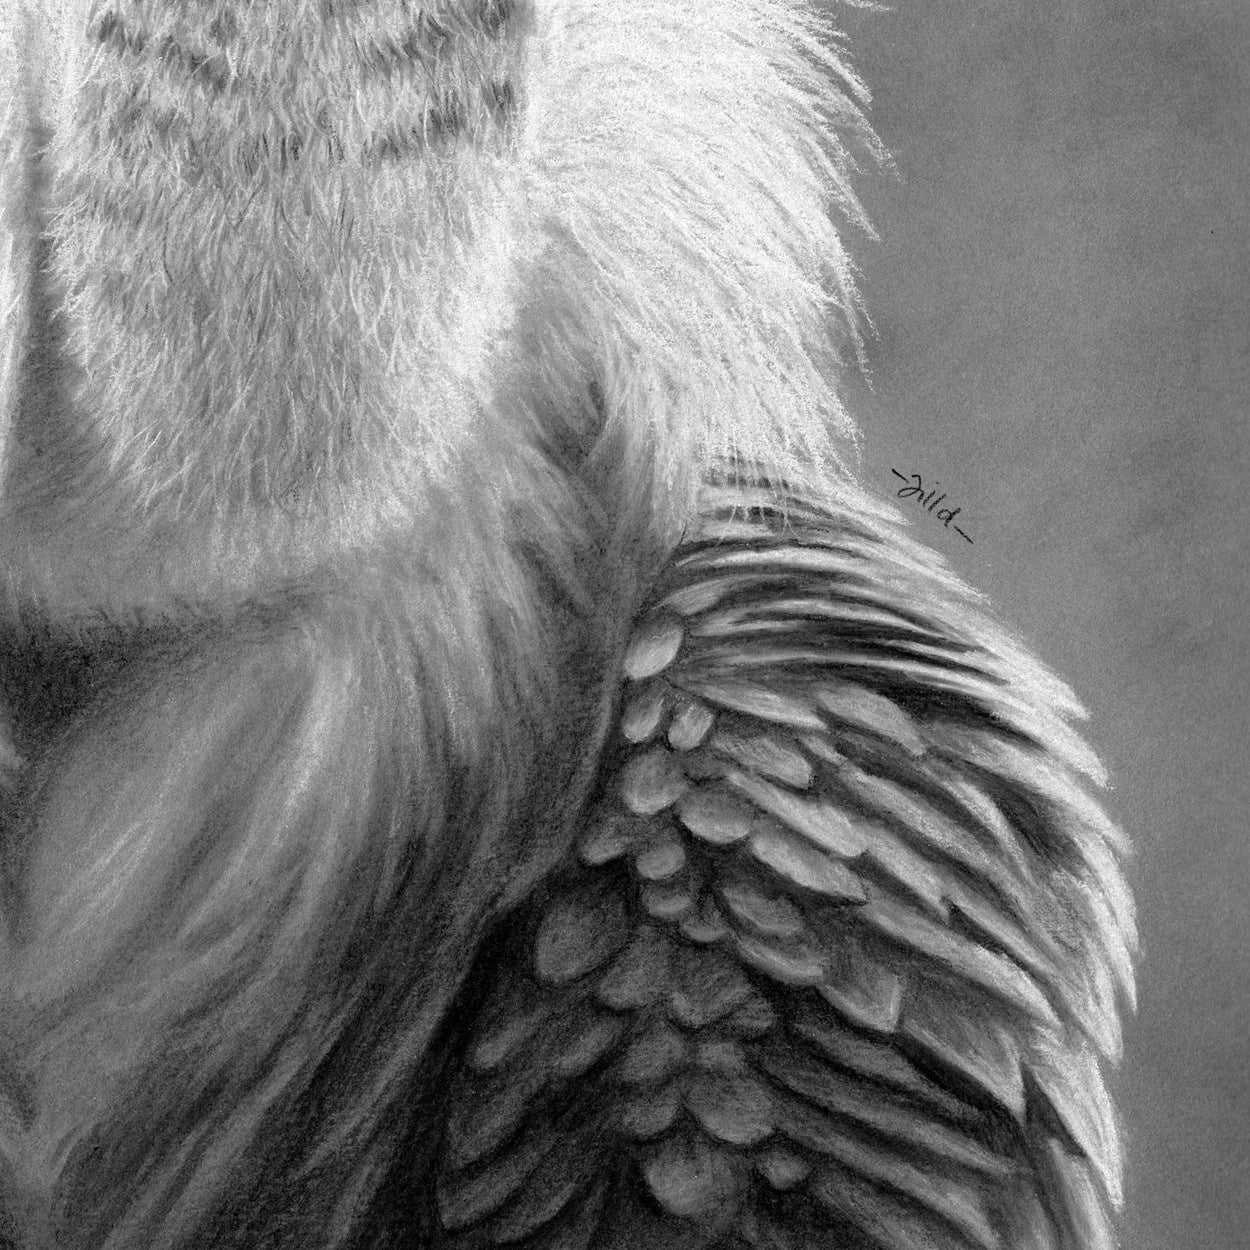 Griffon Vulture Feathers Close-up 3 - Jill Dimond